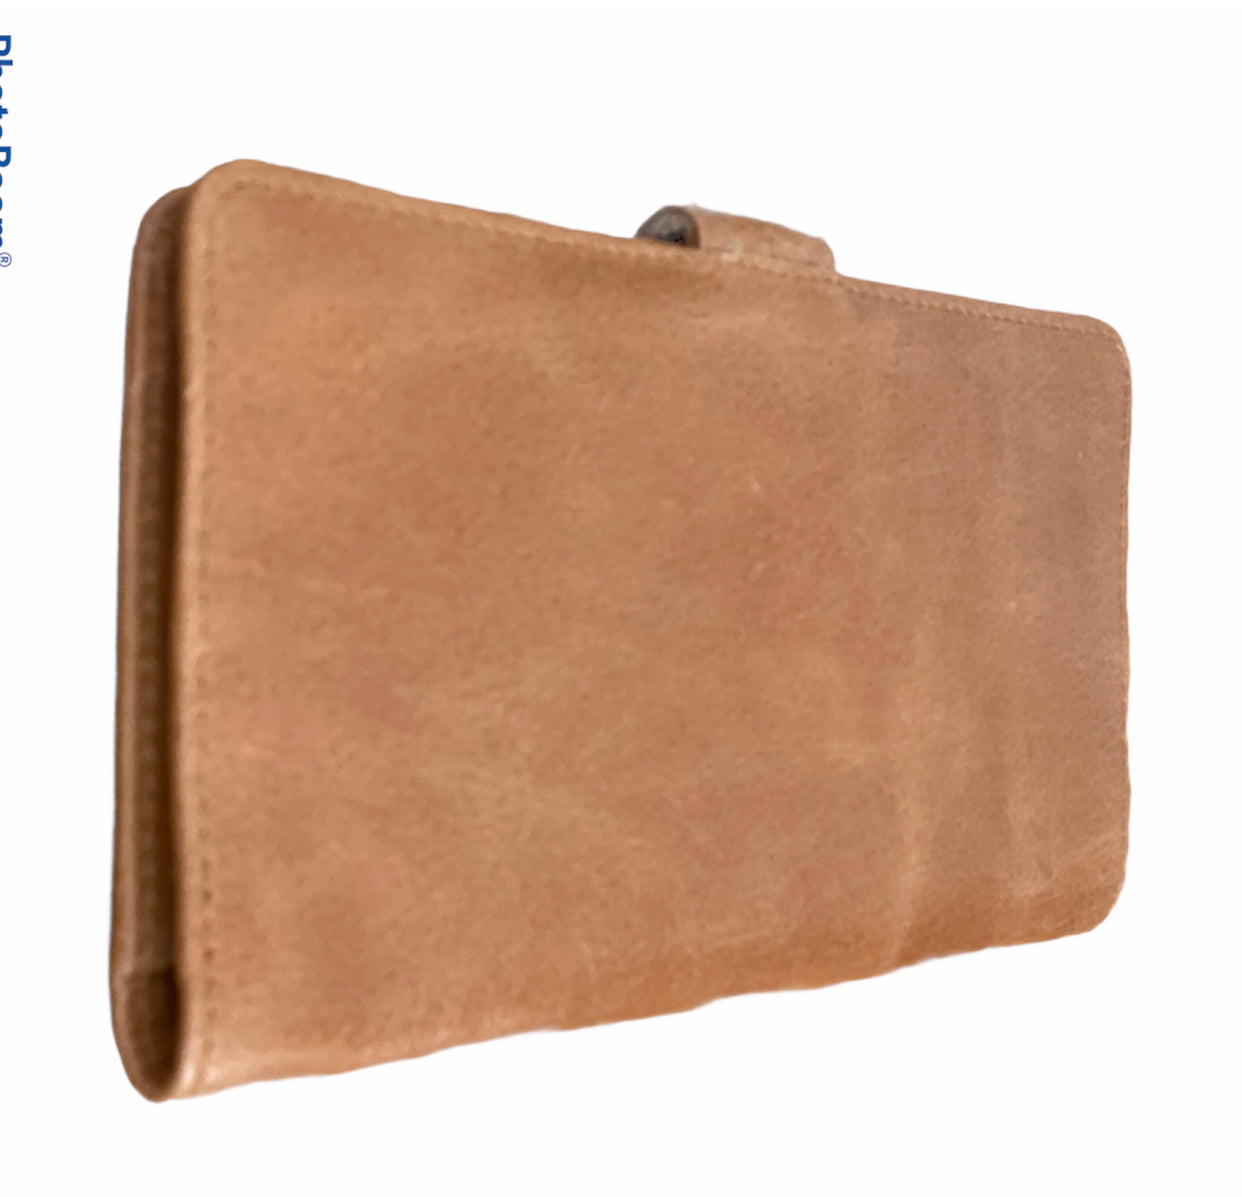 A7770 - Ladies Western Leather Wallet